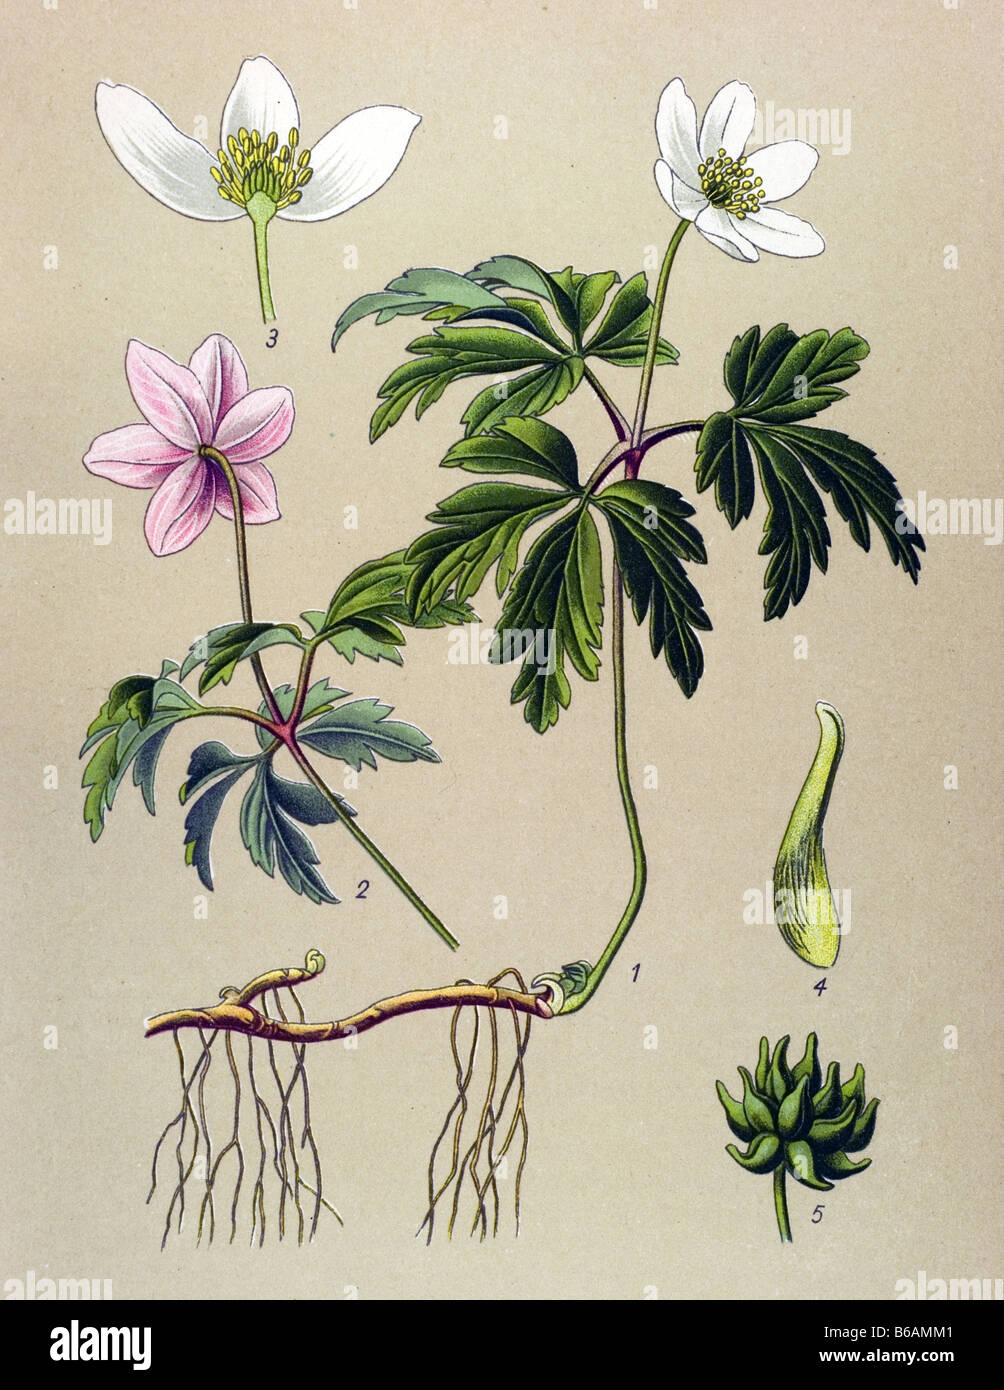 Thimbleweed , Anemone nemorosa poisonous plants illustrations Stock Photo